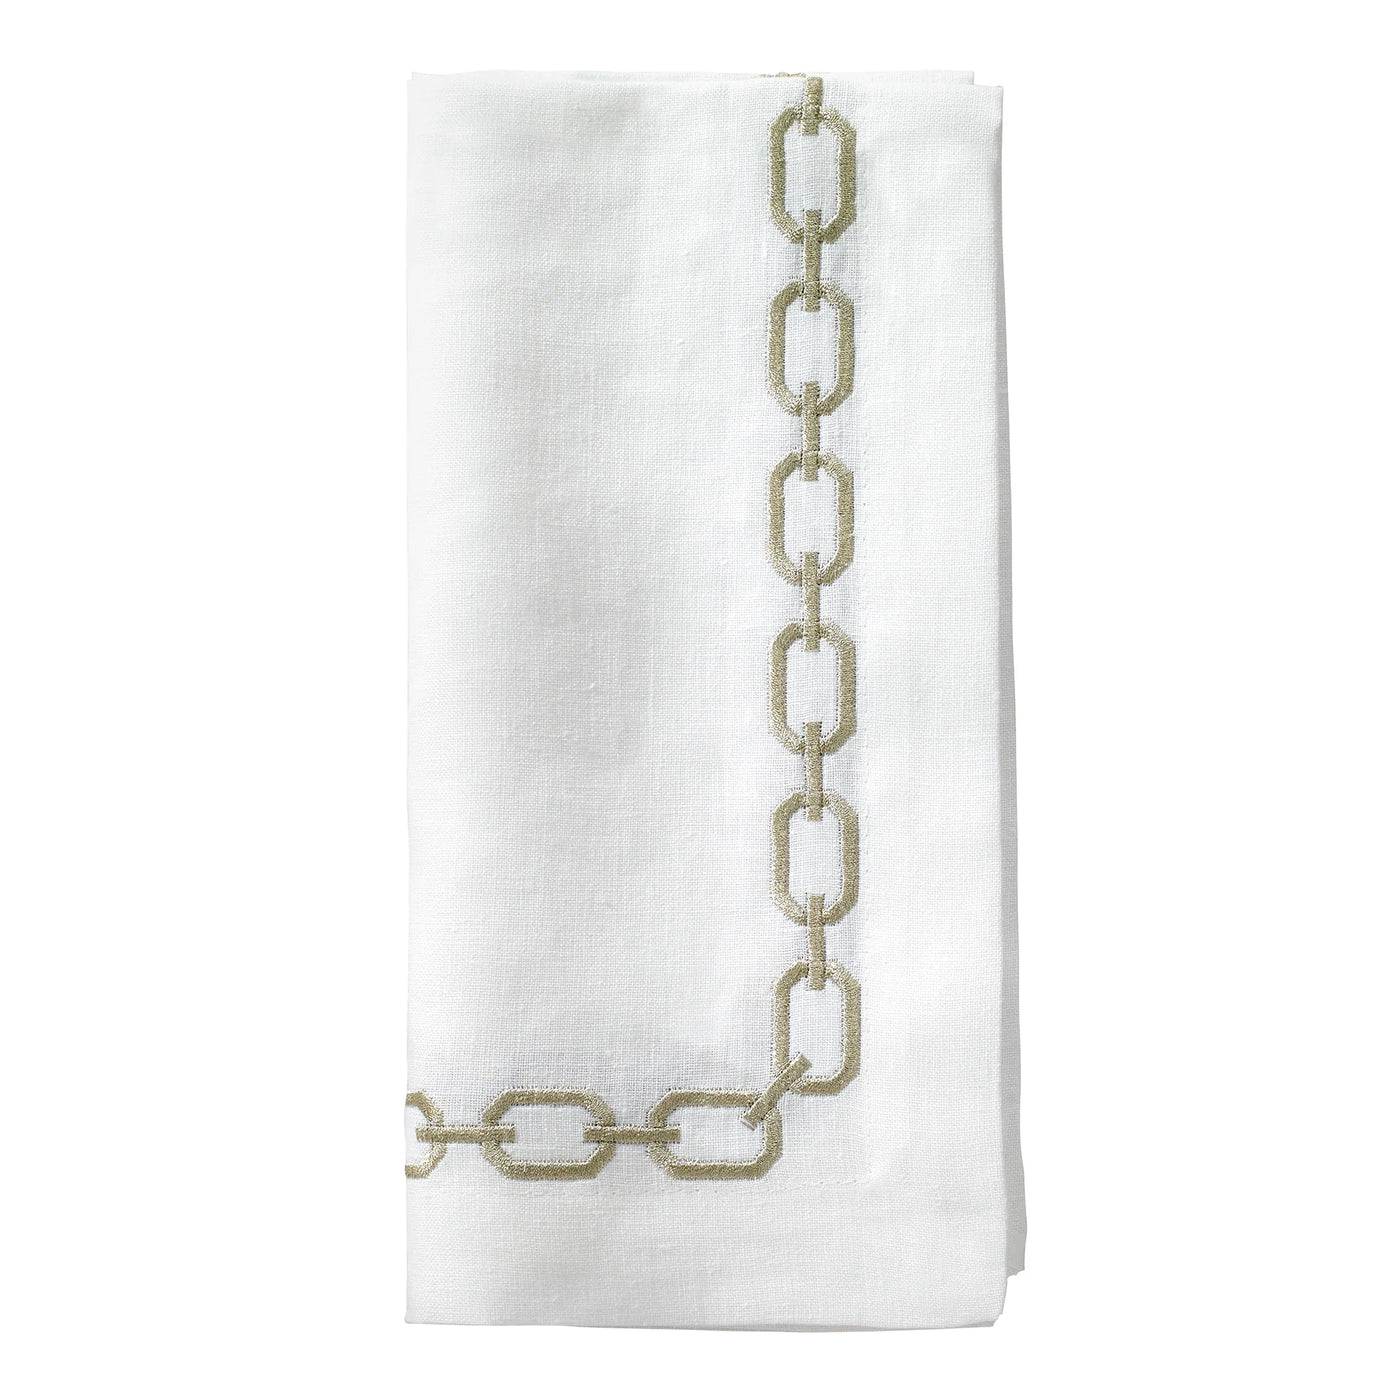 Chain Link Linen Napkins - Set of 4